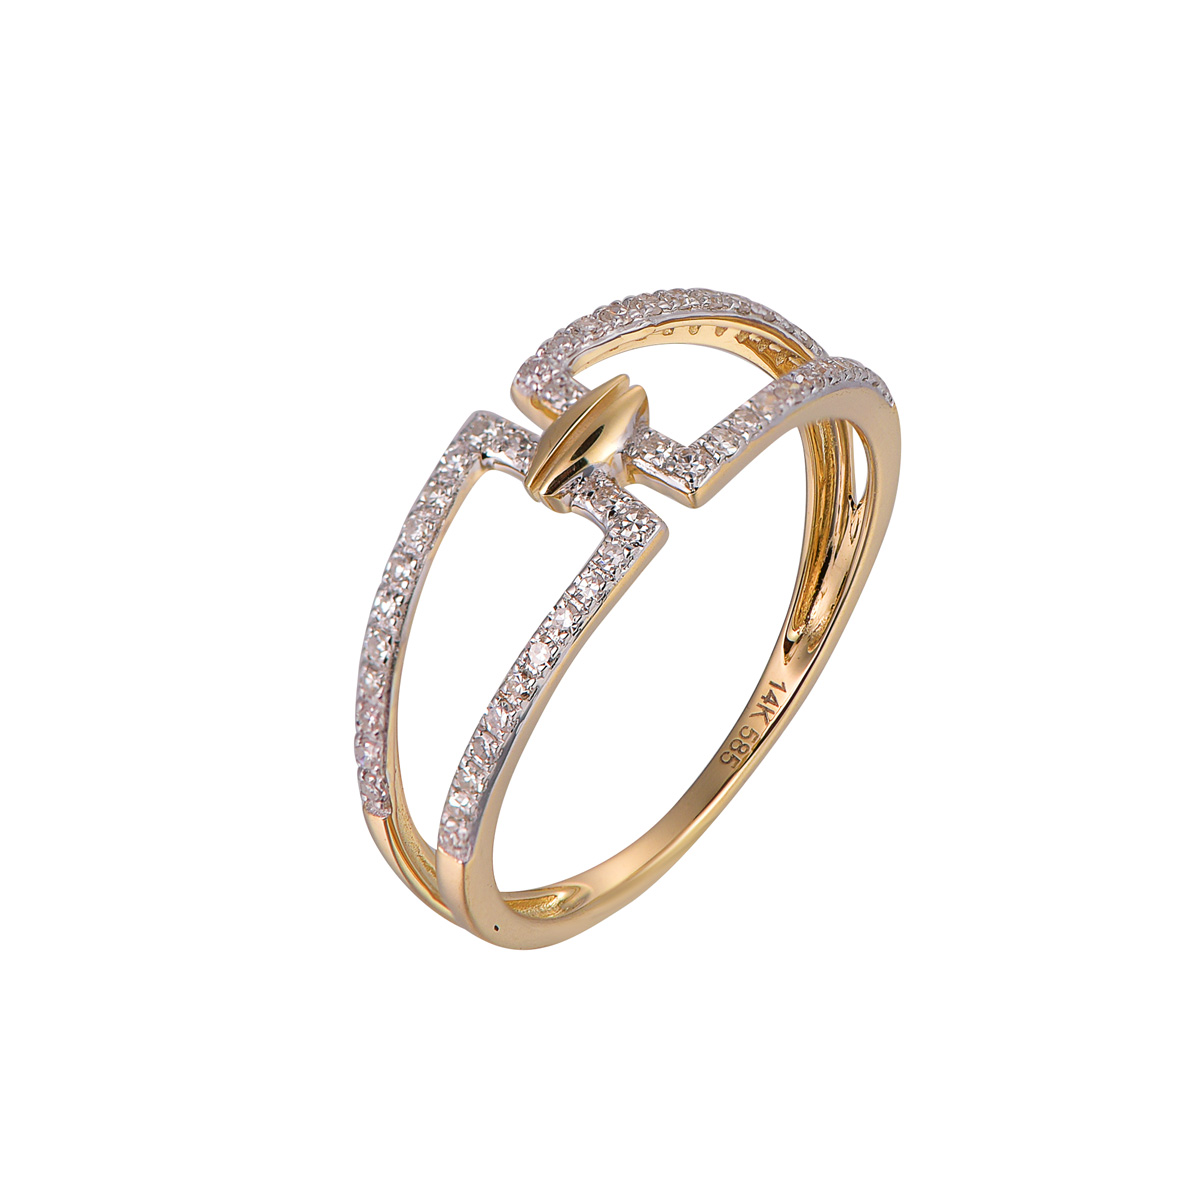 74536R
14K Yellow gold diamond ring